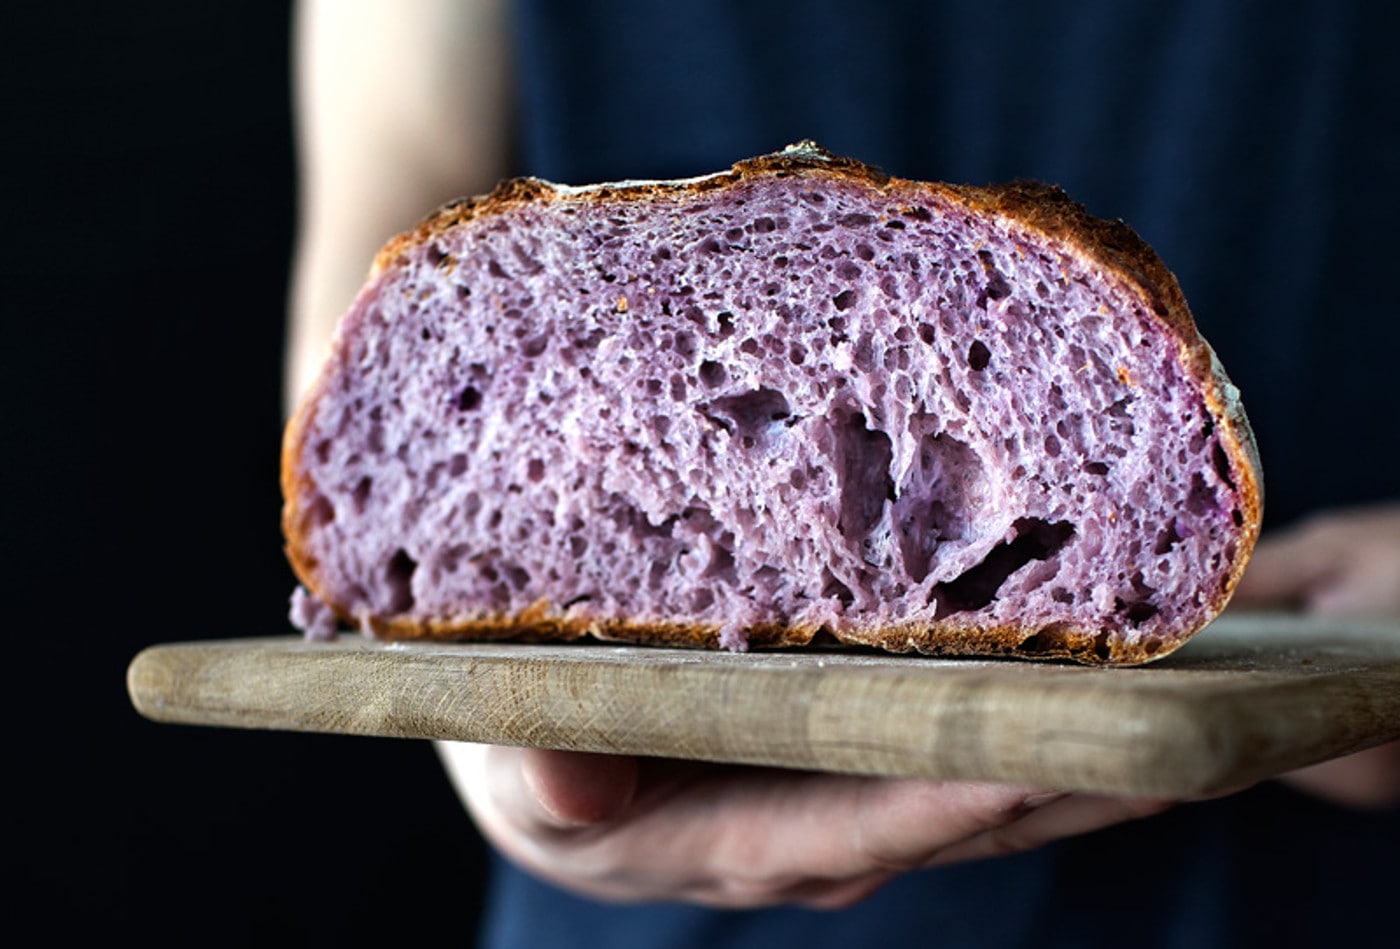 https://www.dotmug.net/wp-content/uploads/2017/10/25.-Pane-Viola-Purple-Bread-Antocianine-Superfood-Dotmug.jpg